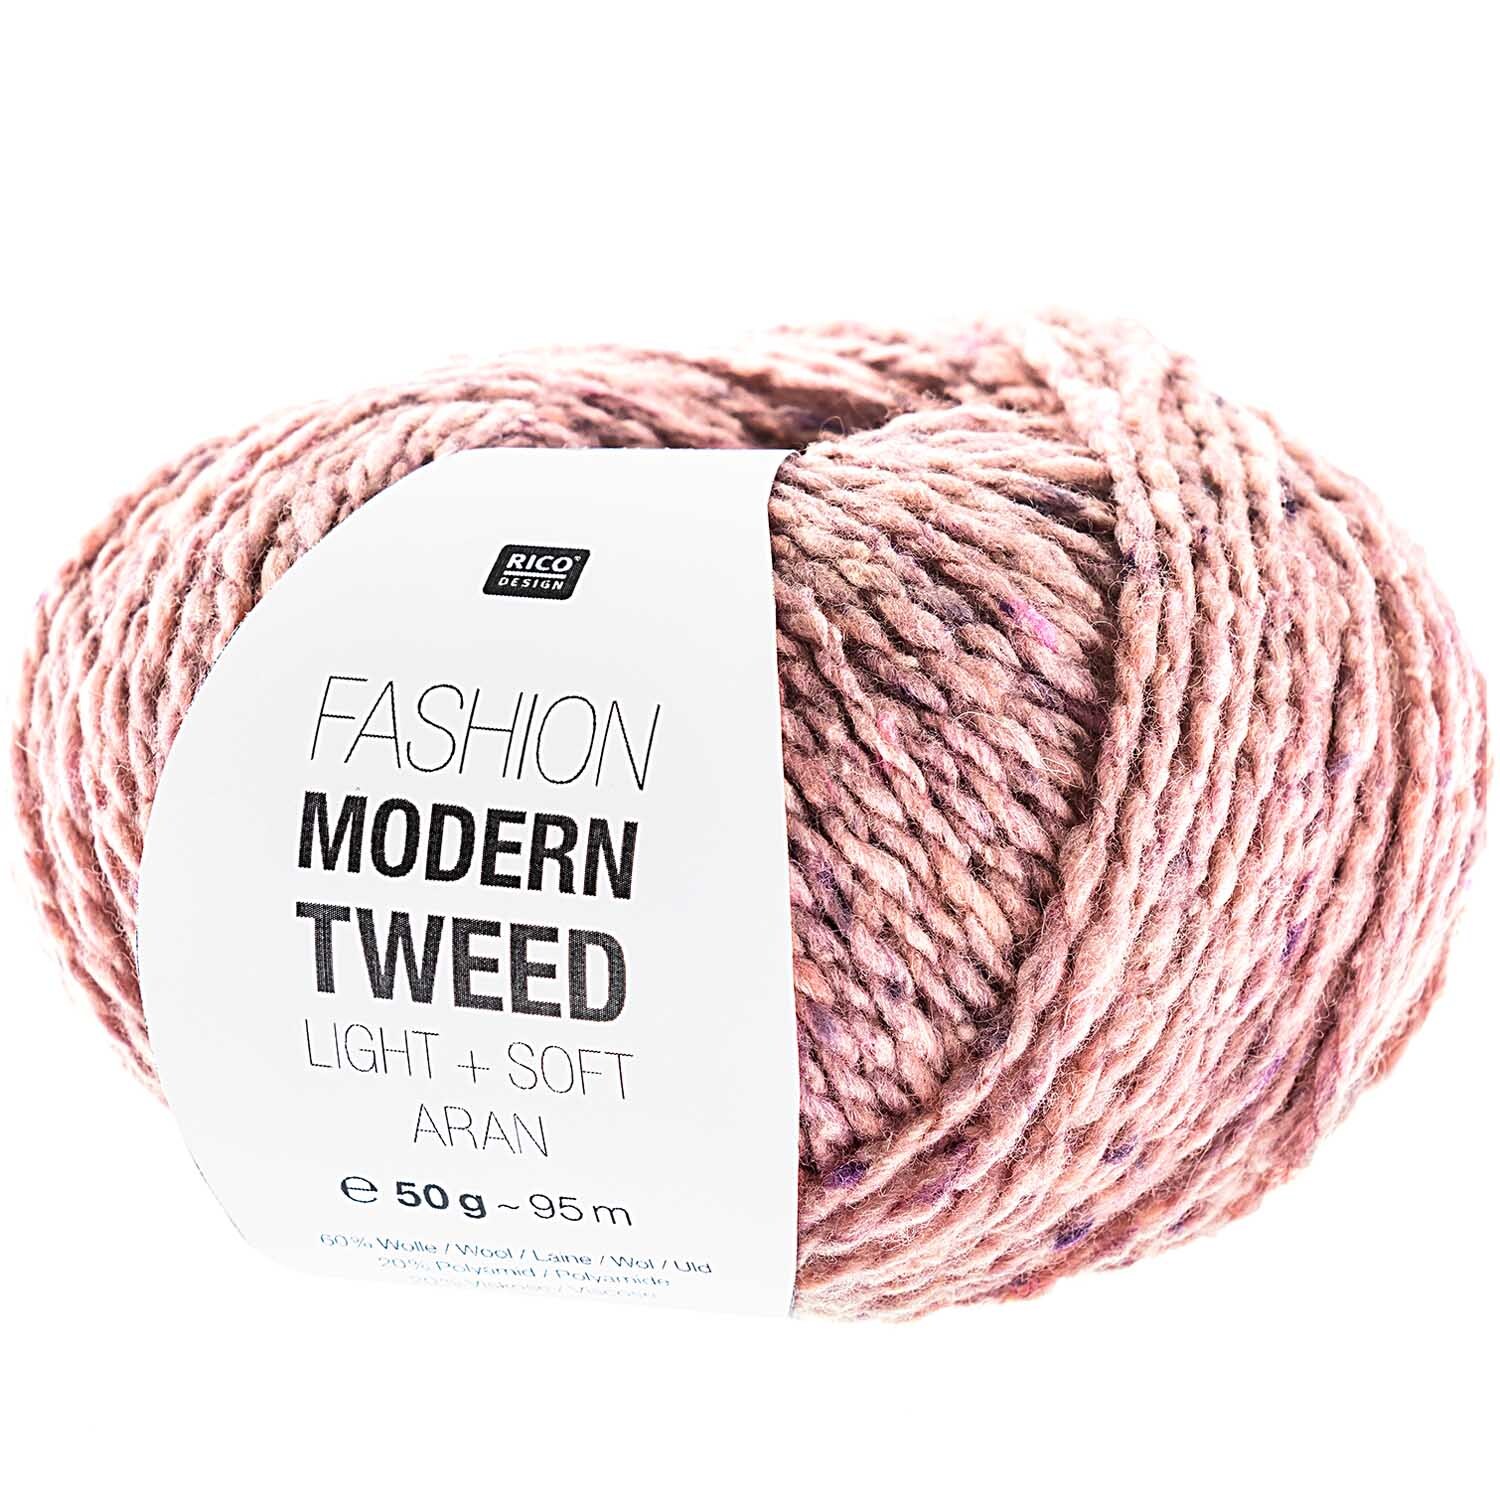 Fashion Modern Tweed aran